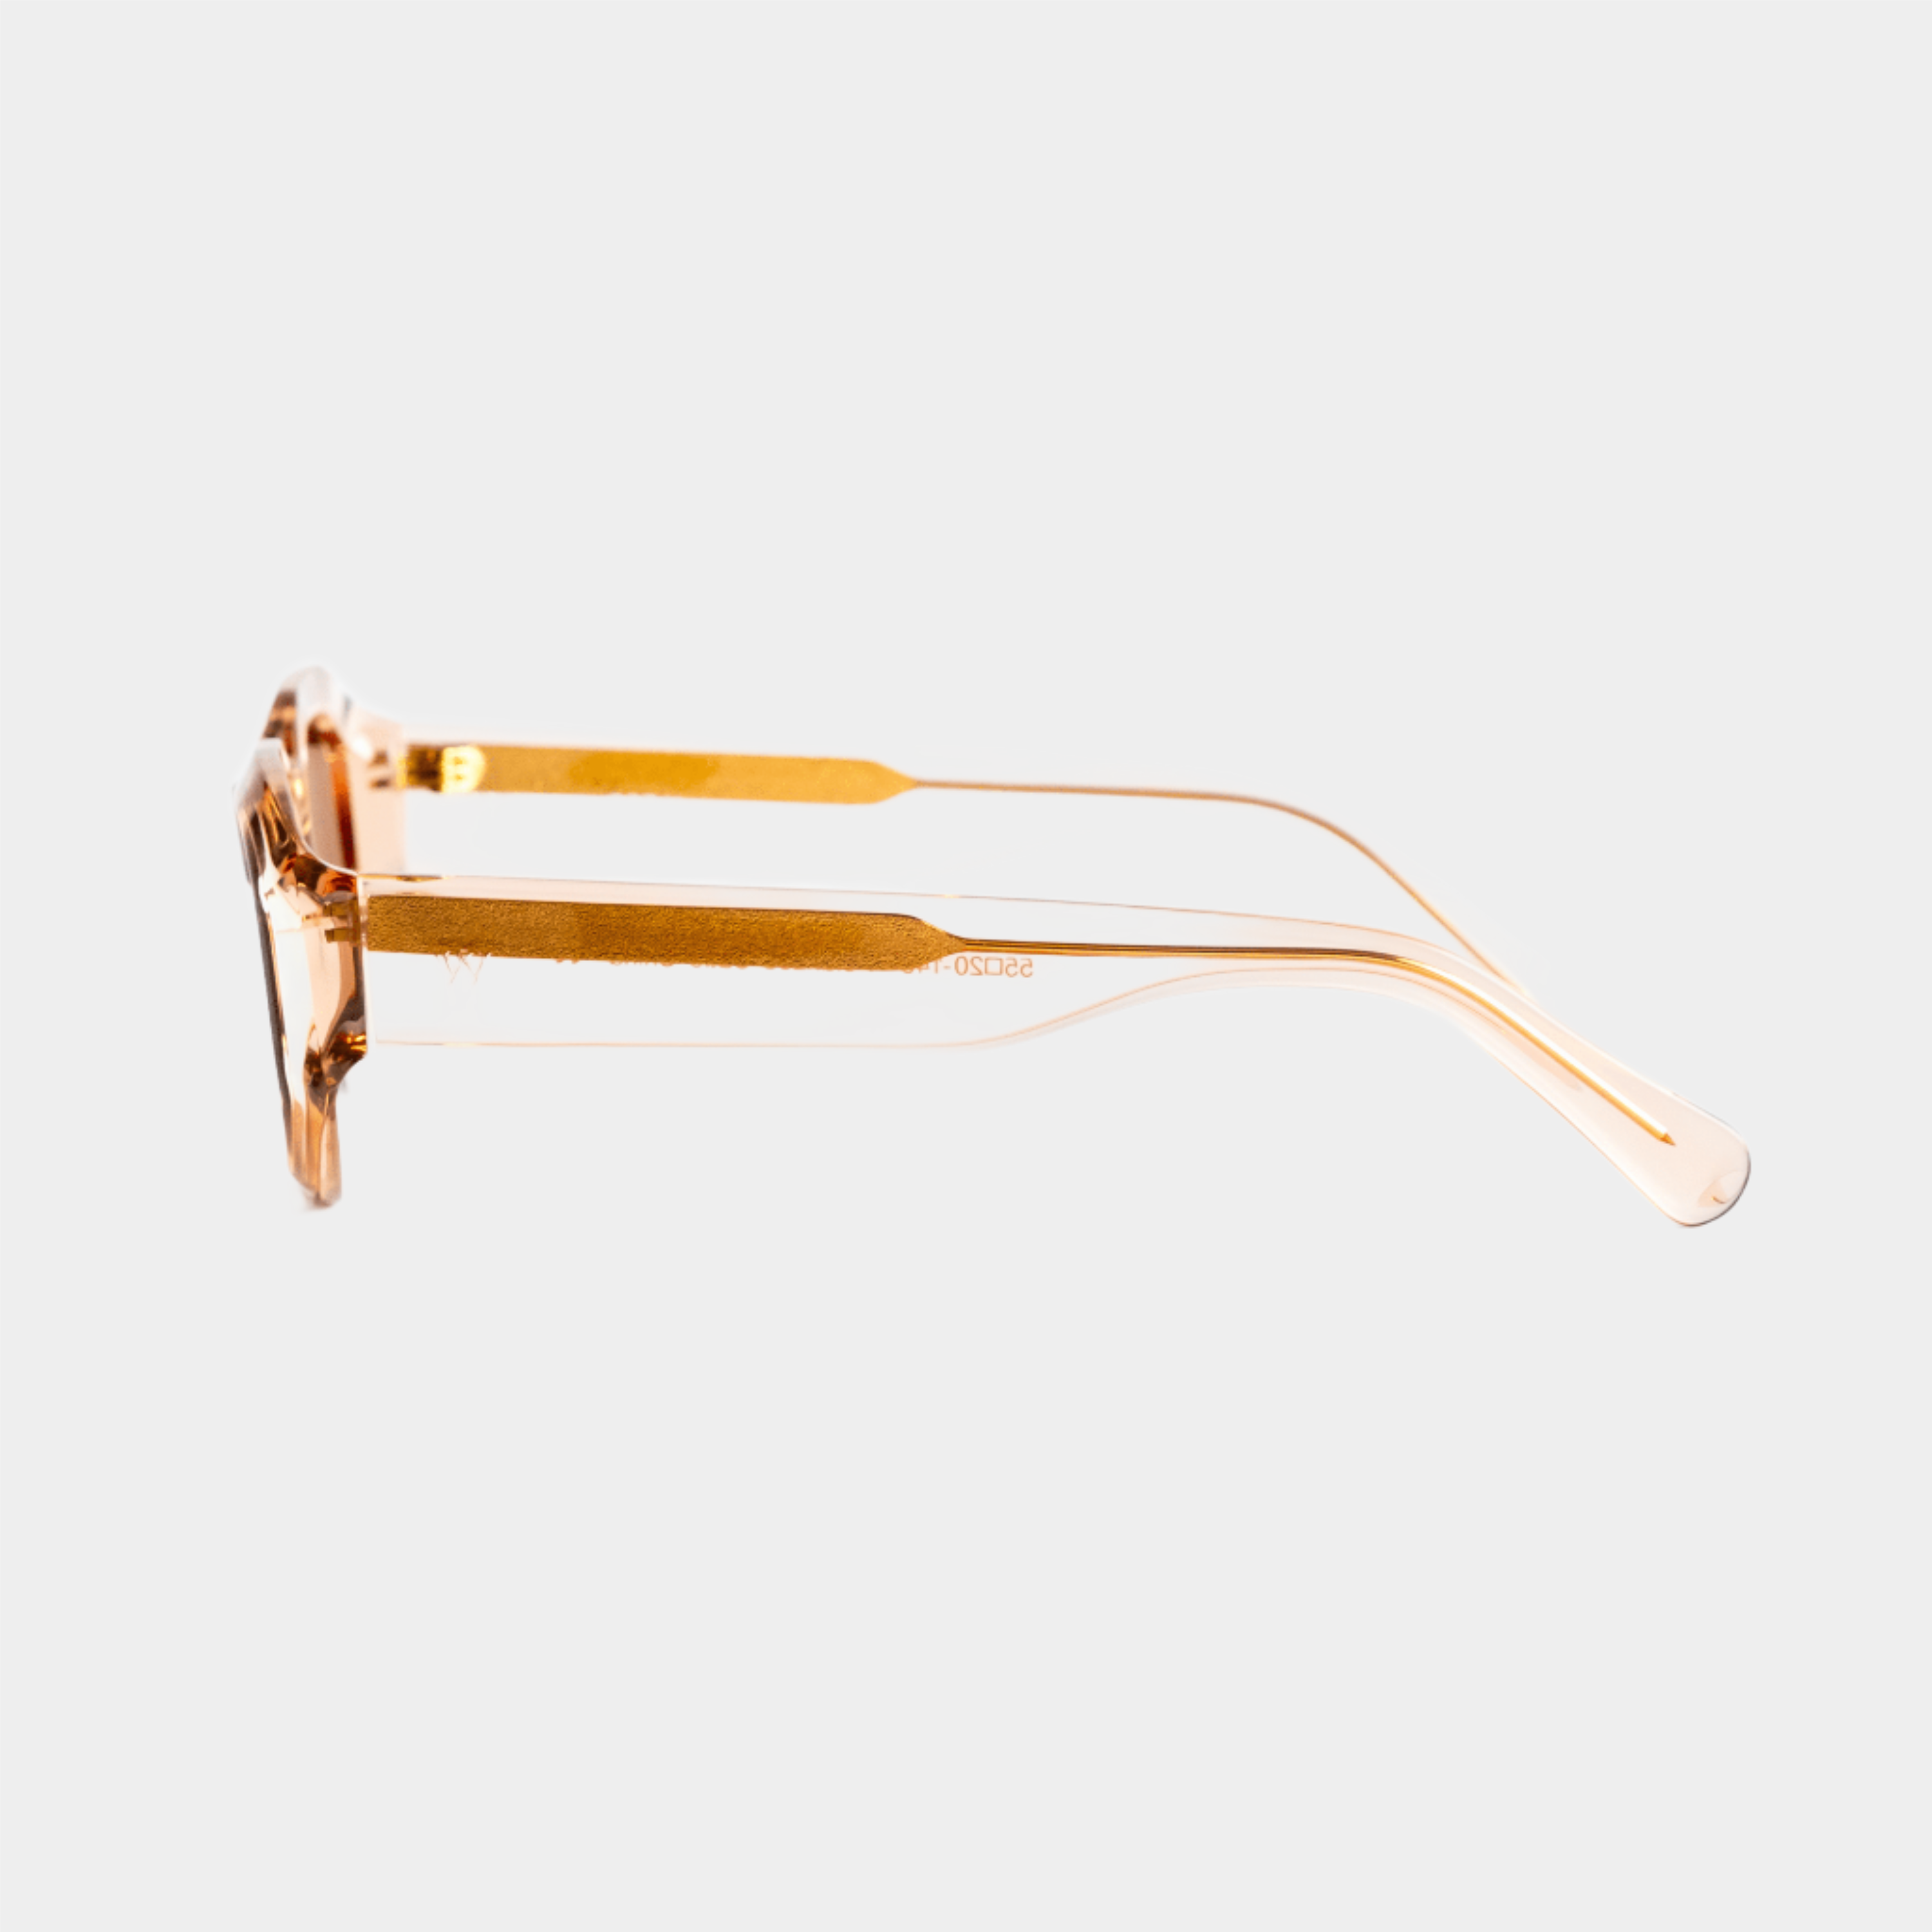 Walter Hill Sunglasses Medium/Large / Polarized Cat.3 / Mazzucchelli Acetate CORAL - Champagne